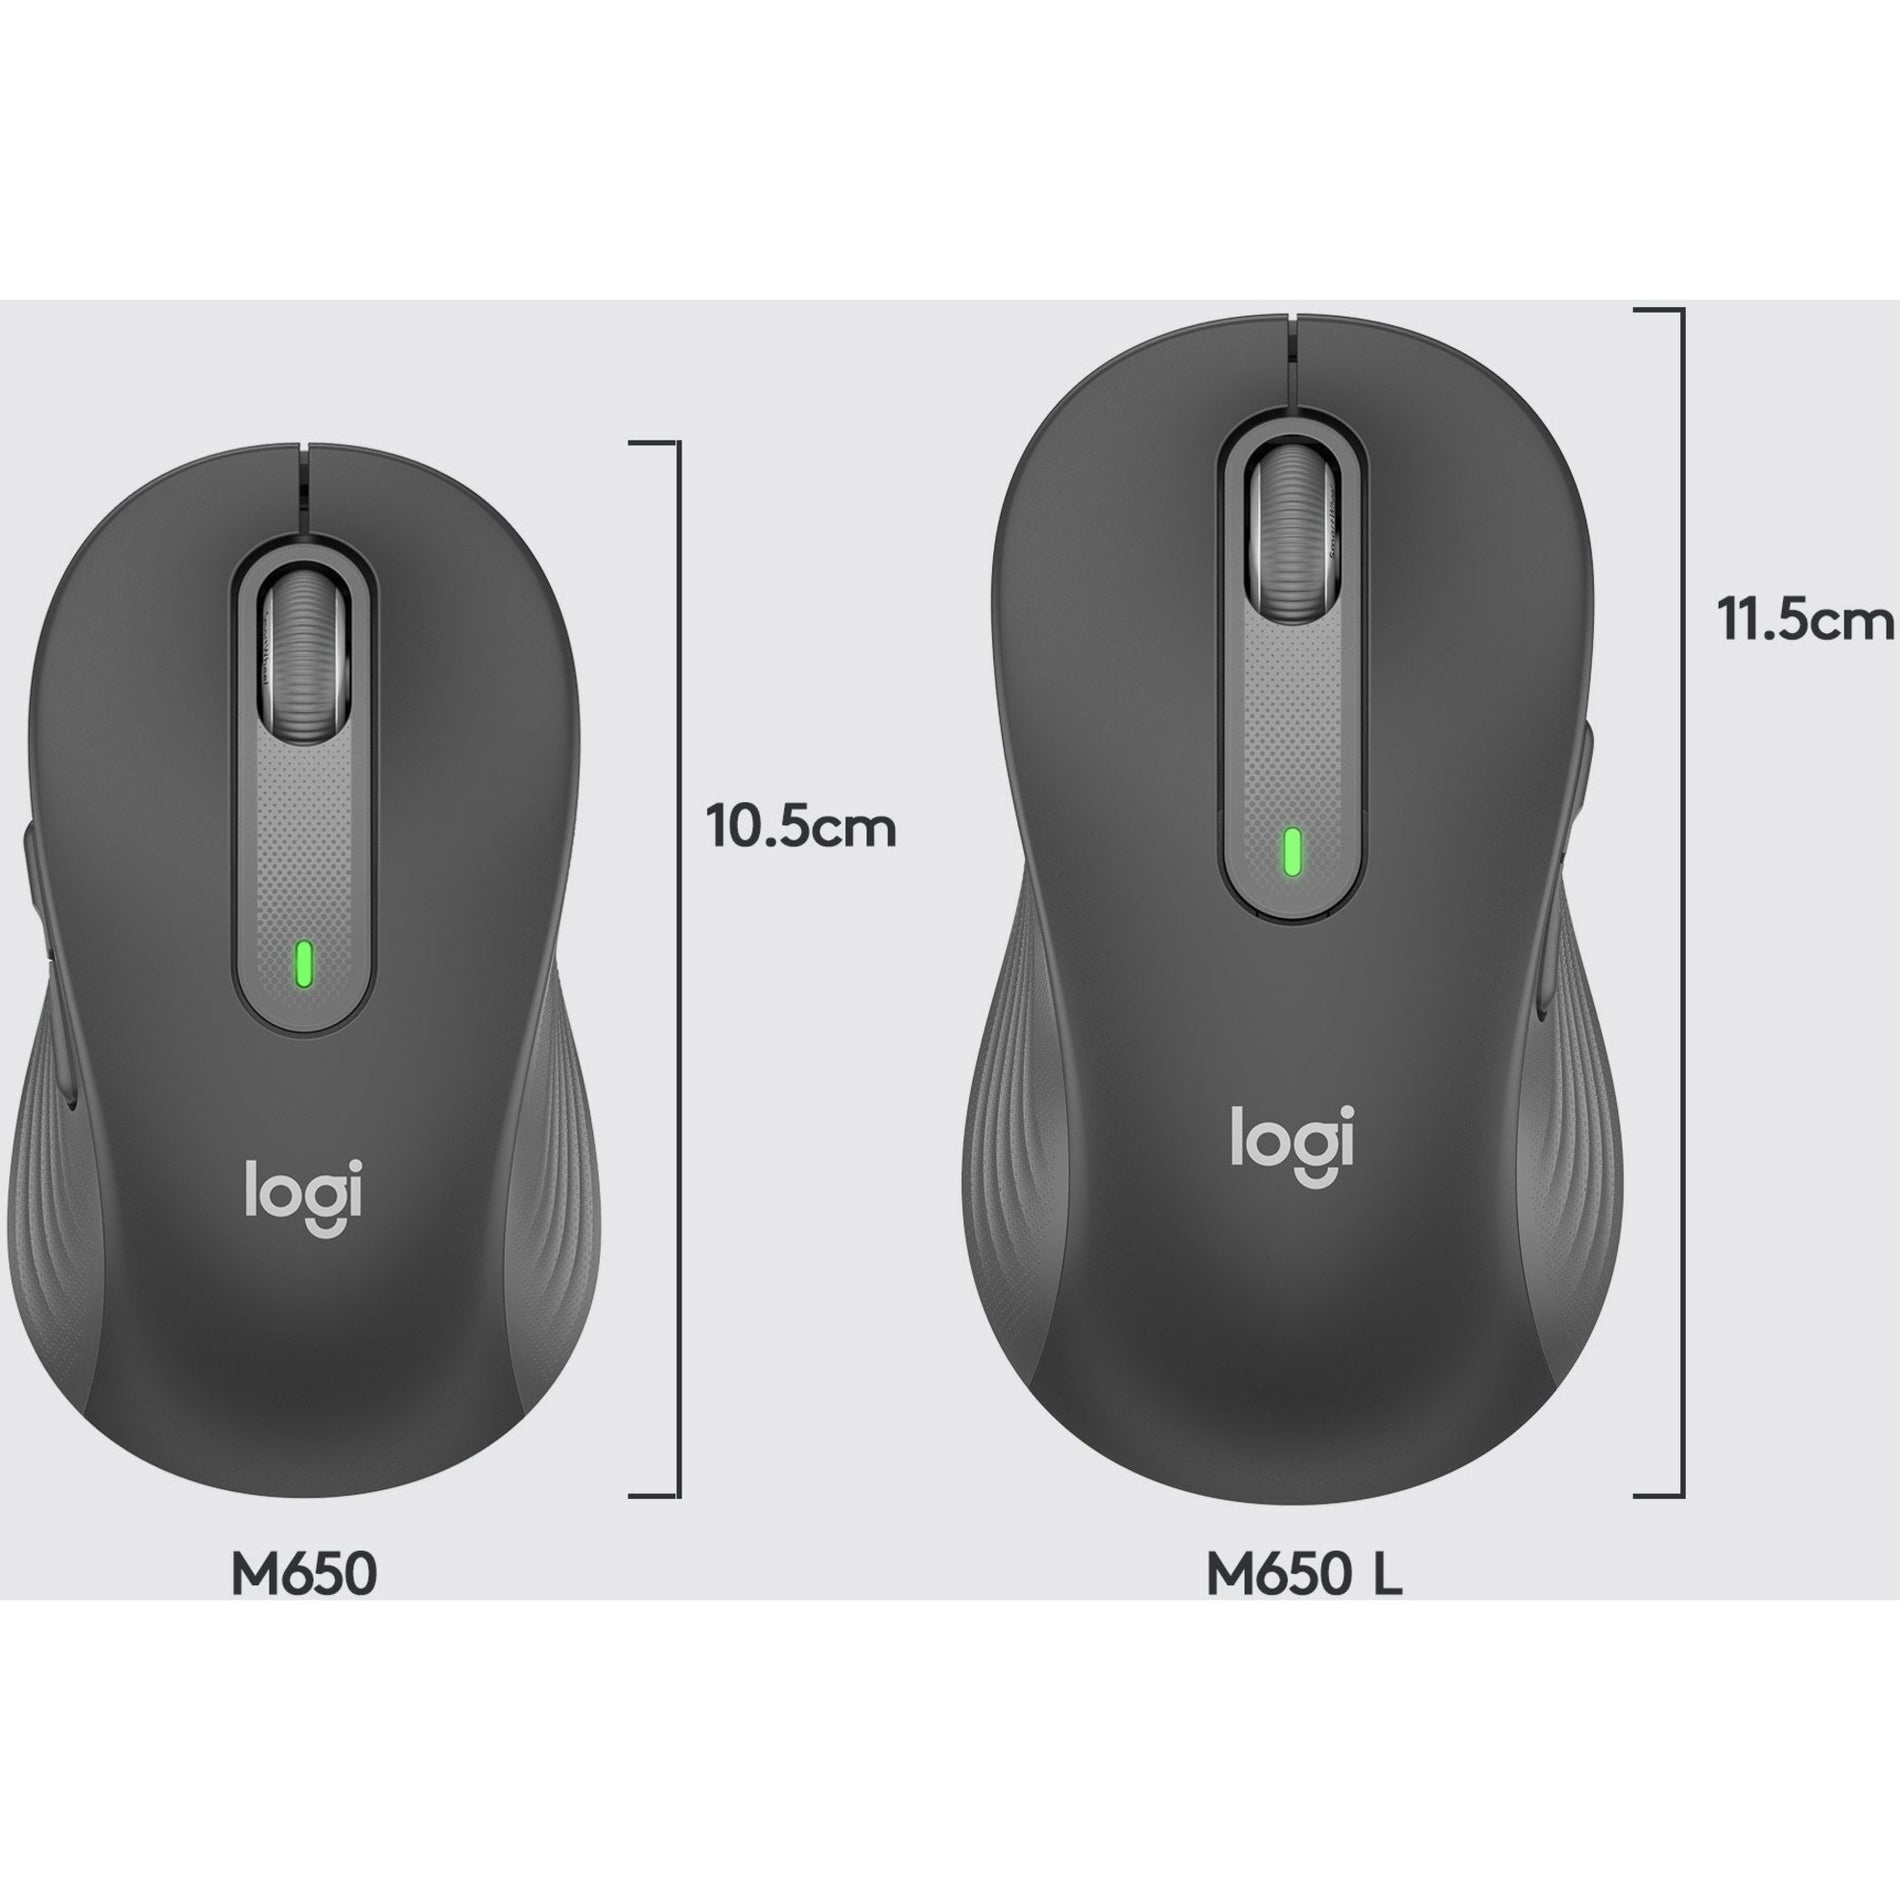 Logitech 910-006272 Signature M650 Mouse Wireless Bluetooth/Radio Frequency Graphite